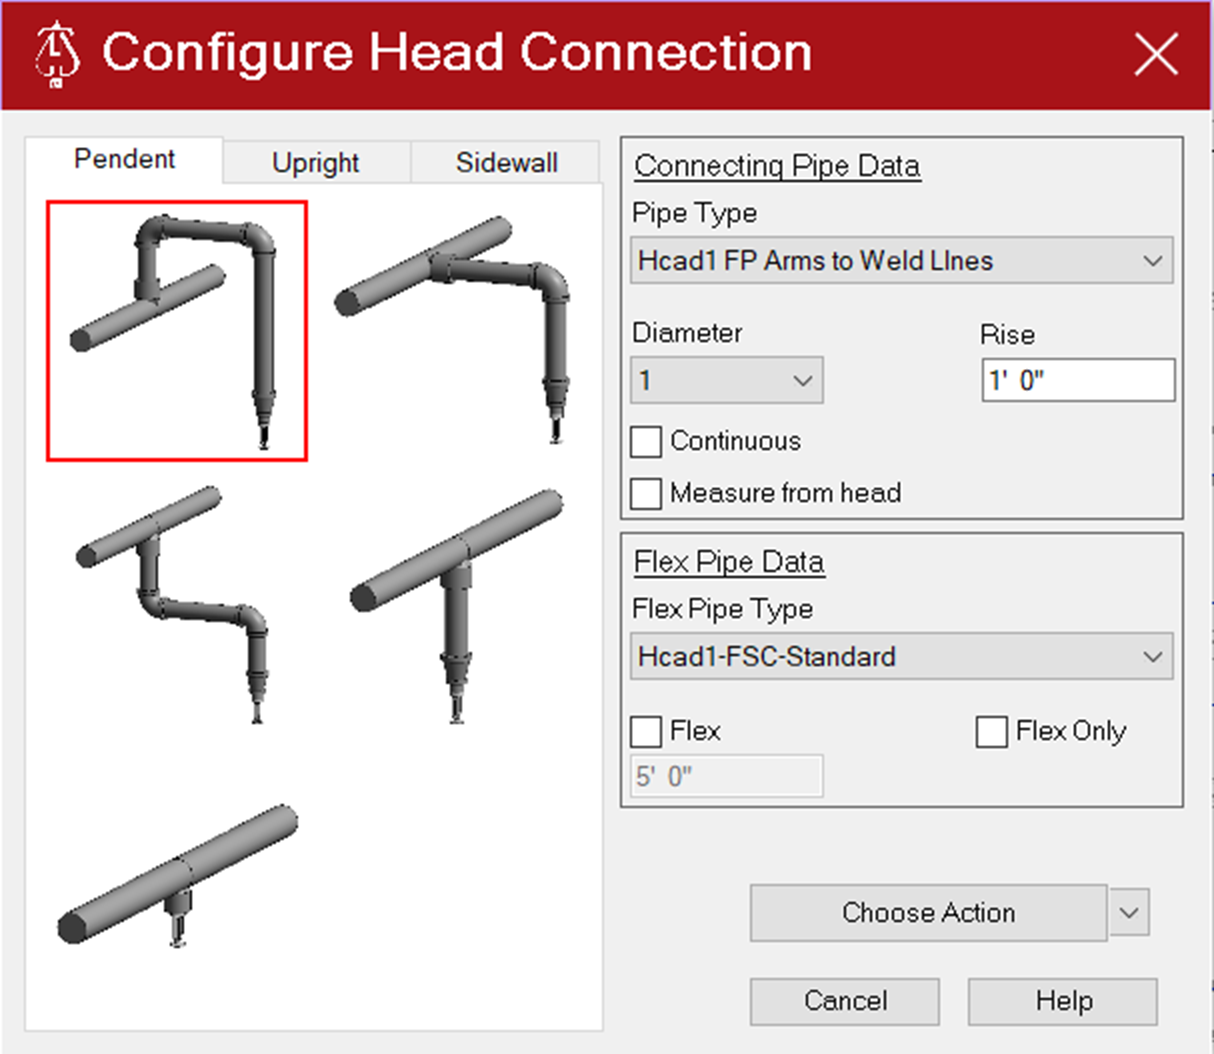 Configure Head Main Dialog